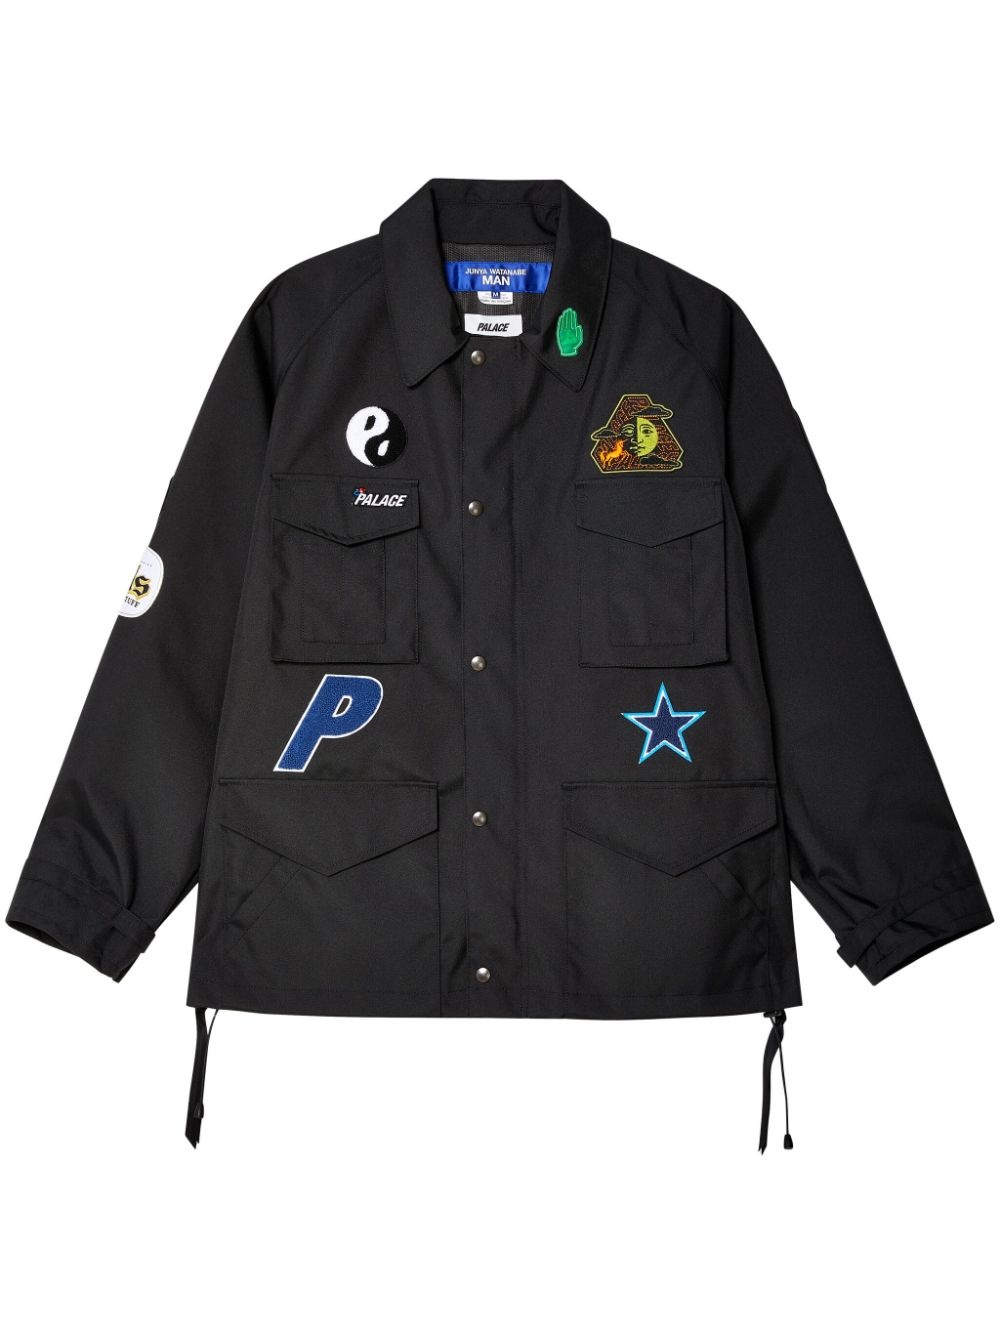 x Palace shirt jacket - 1